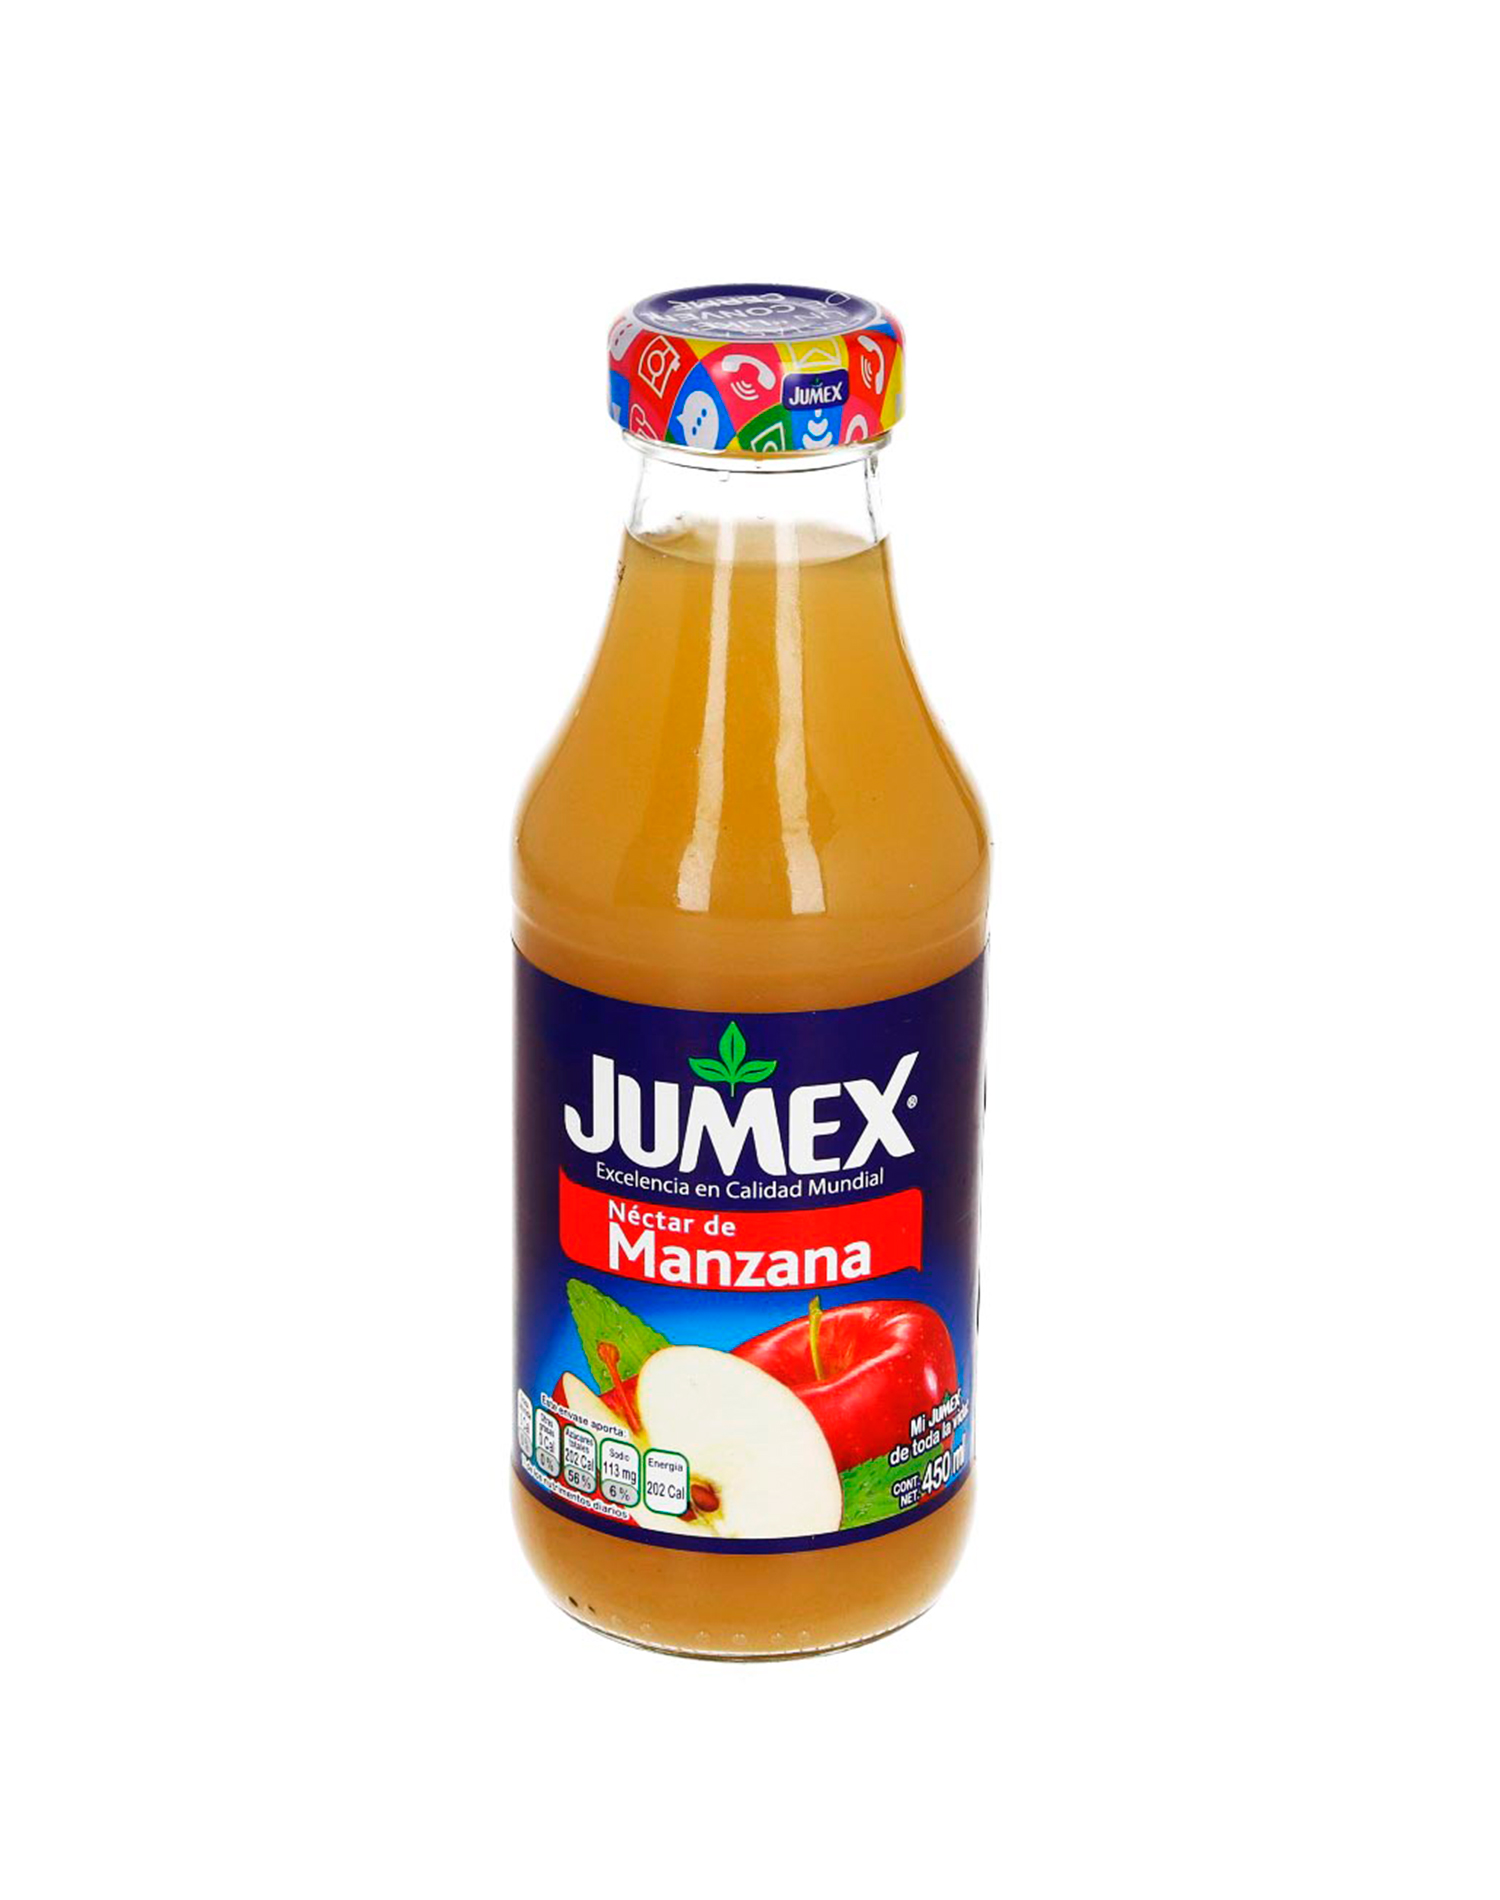 jumex mango nectar benefits